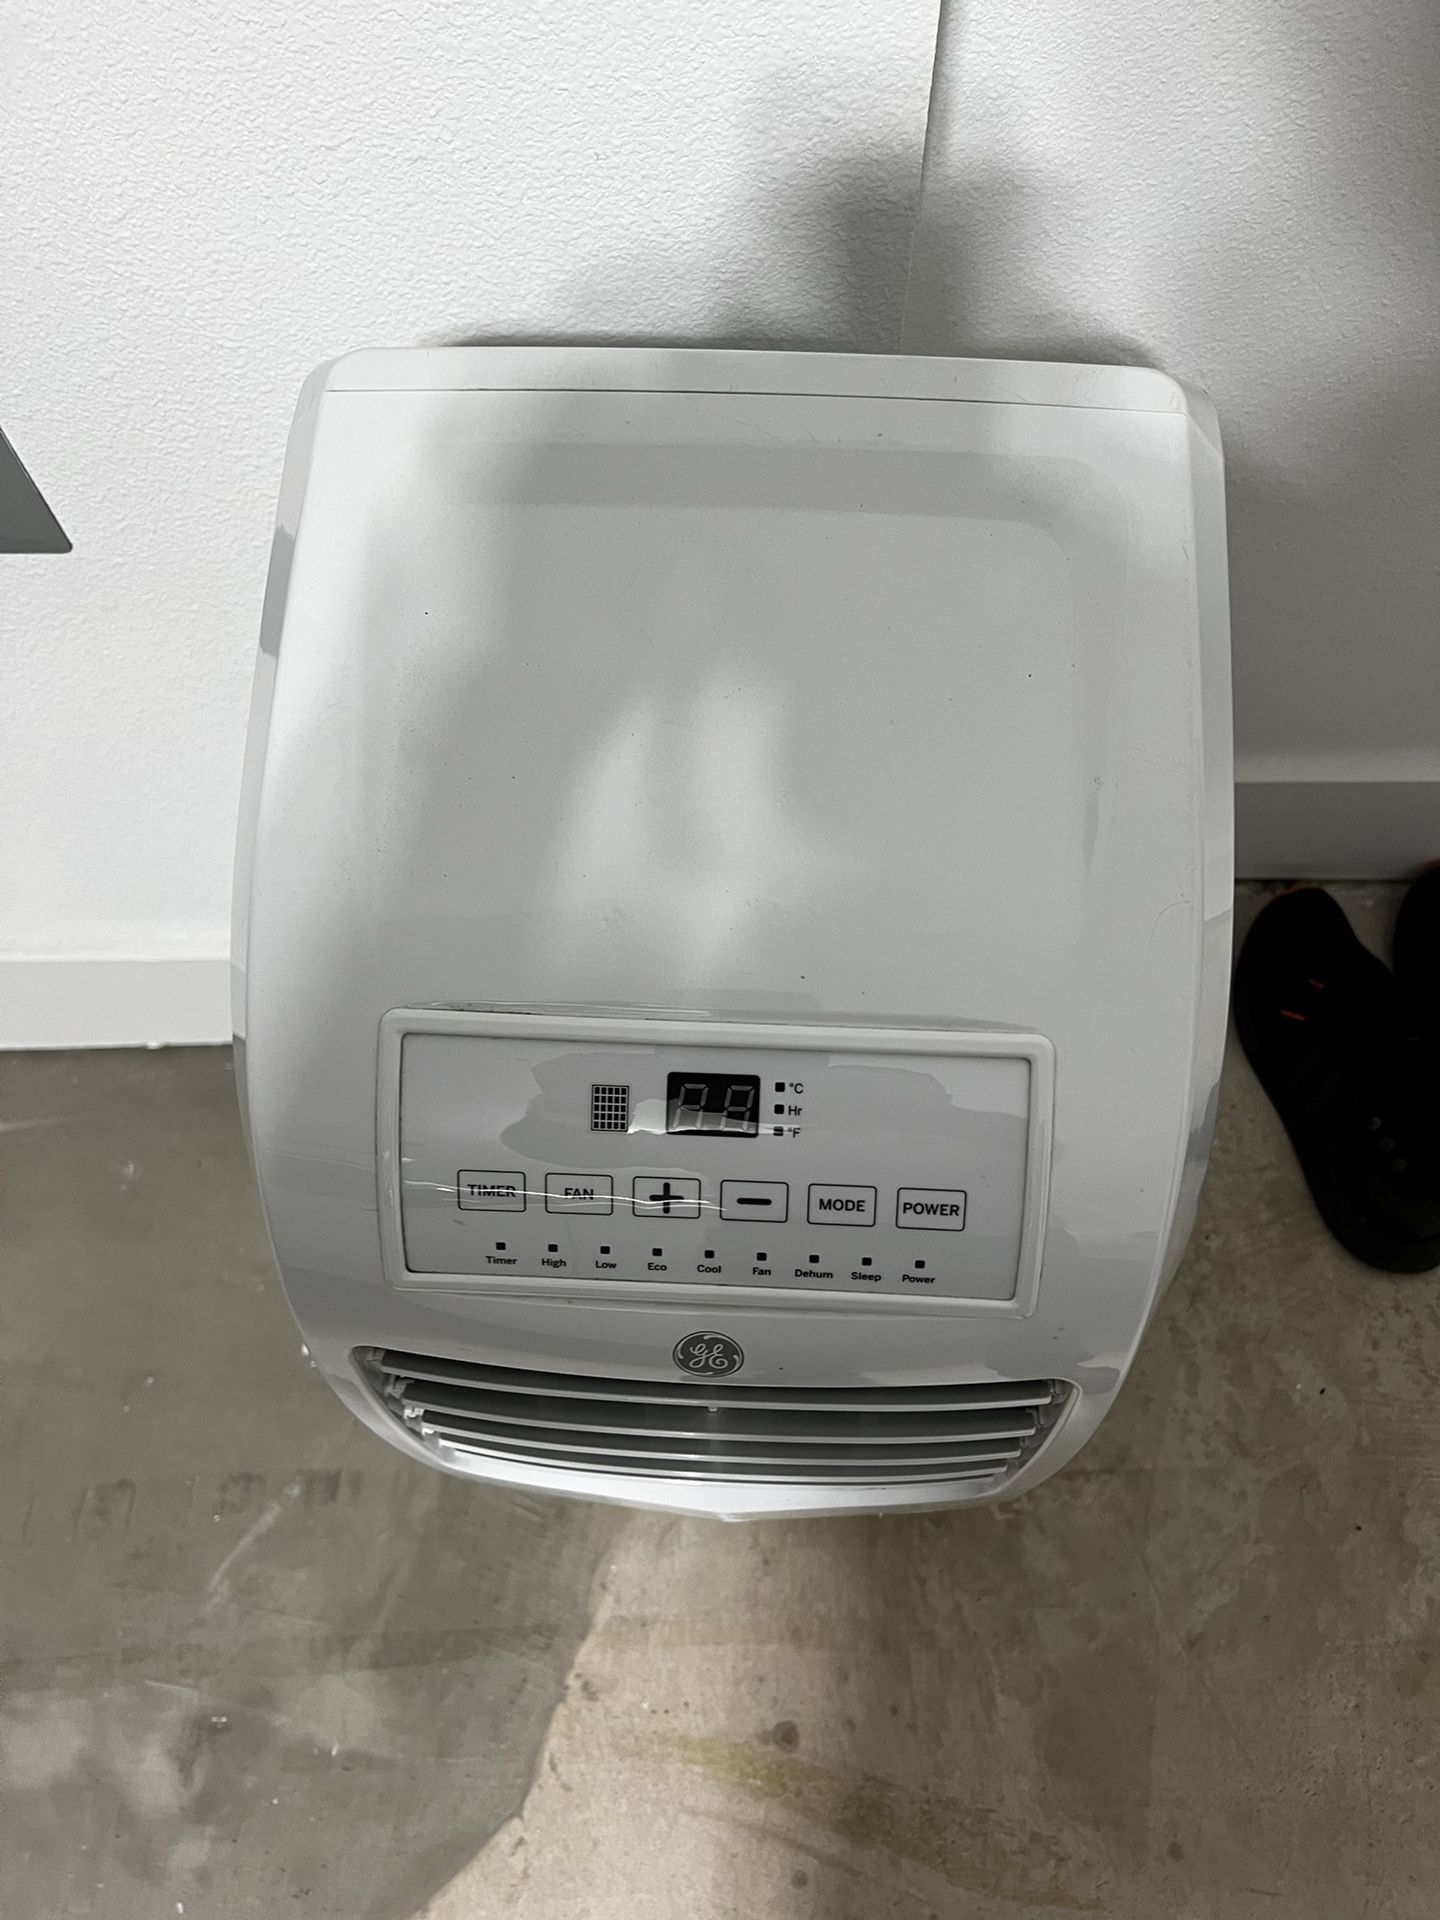 6,000 BTU Portable Air Conditioner with Dehumidifier